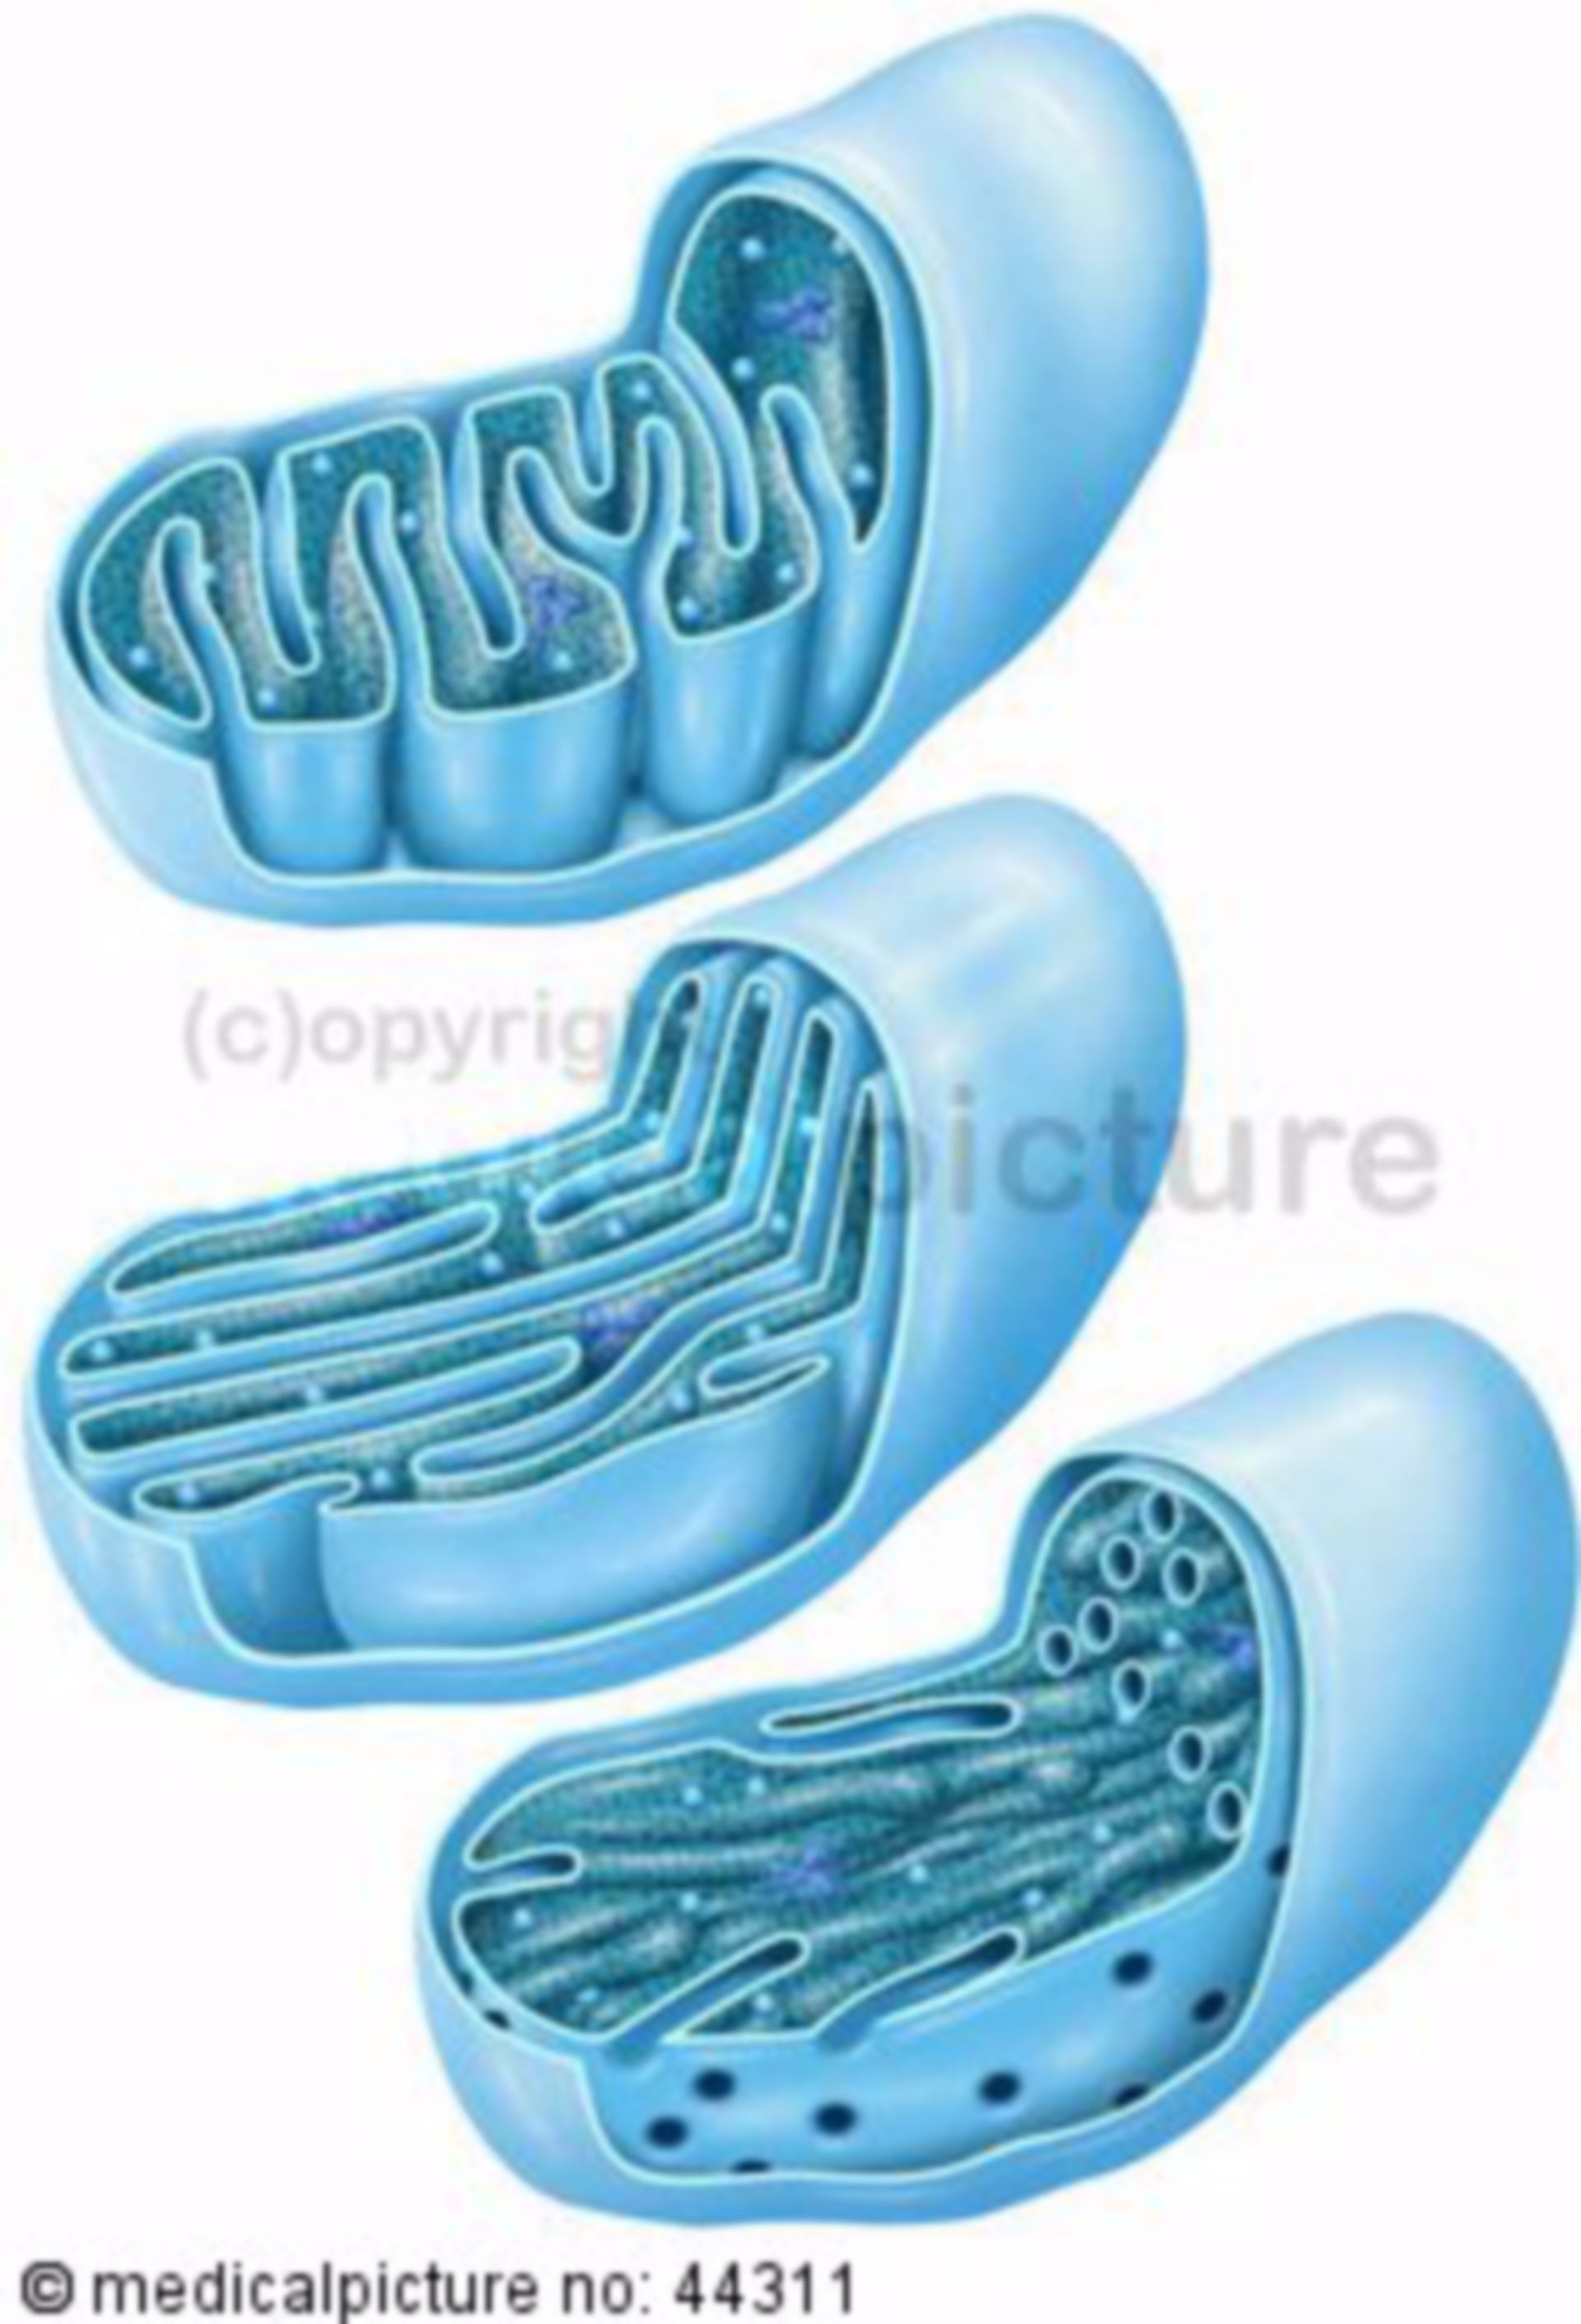 Types of mitochondria